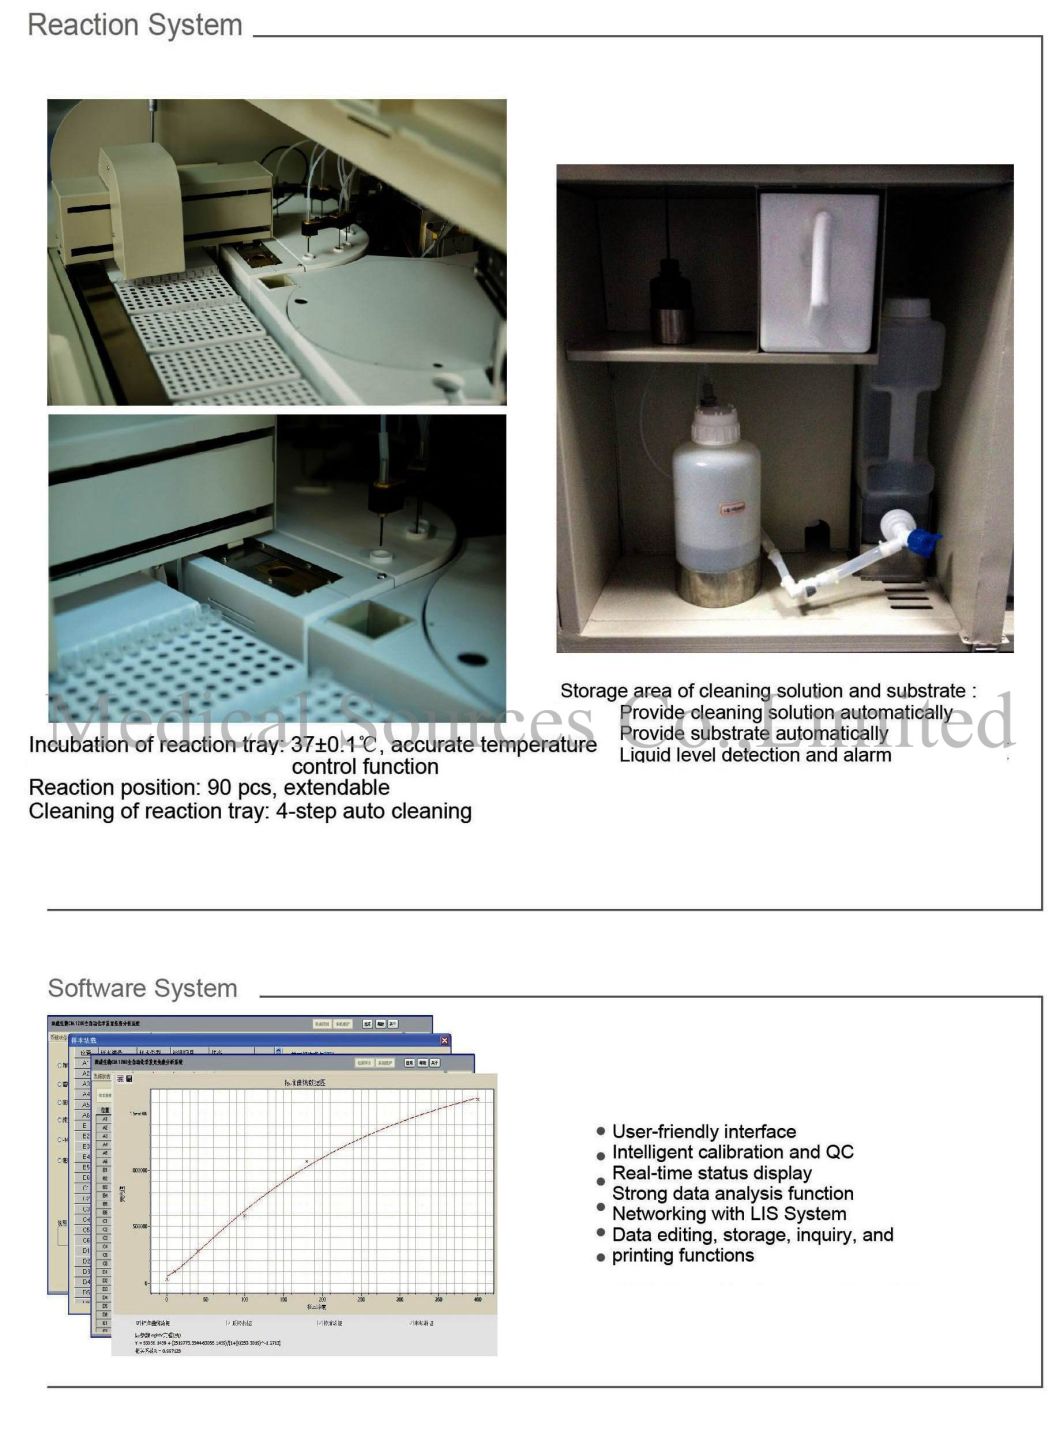 (MS-T120) Fully Automatic, Lab Equipment, Chemiluminescence Immunoassay Clia Analyzer